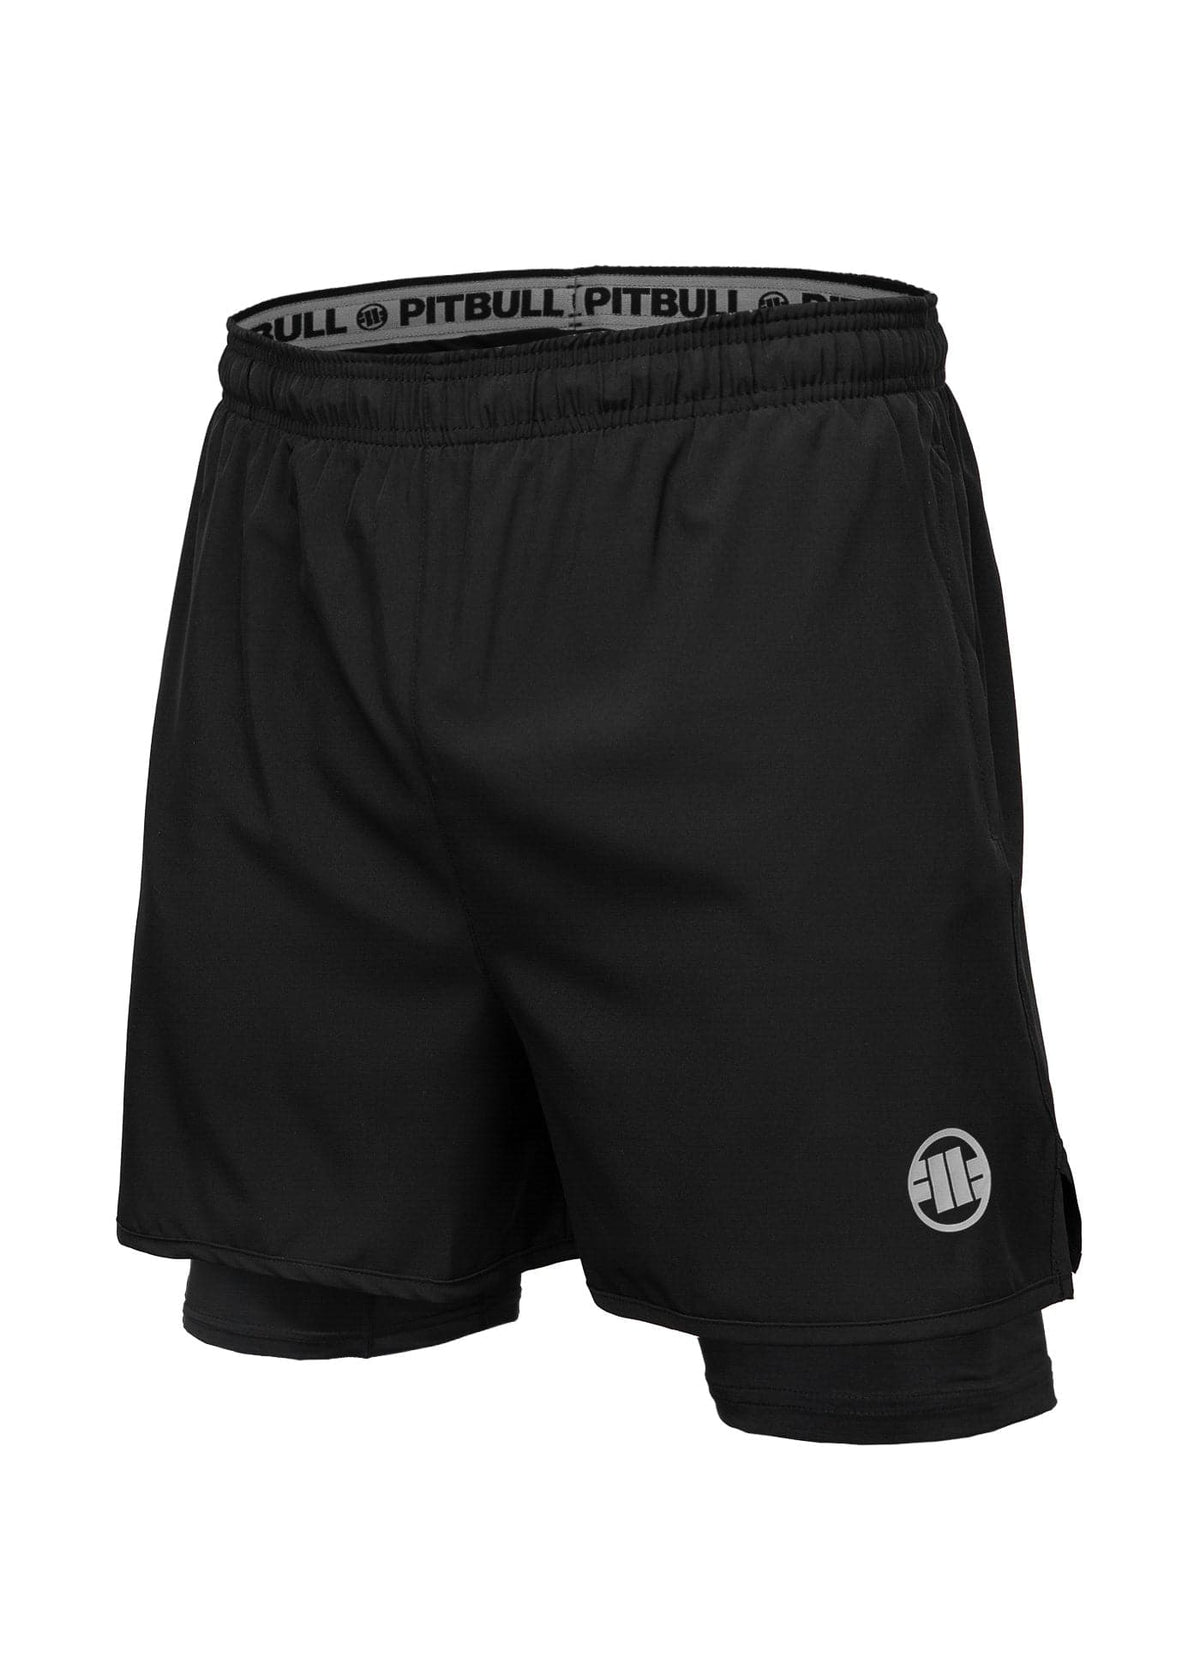 NEW LOGO Mesh Black Shorts - Pitbull West Coast International Store 